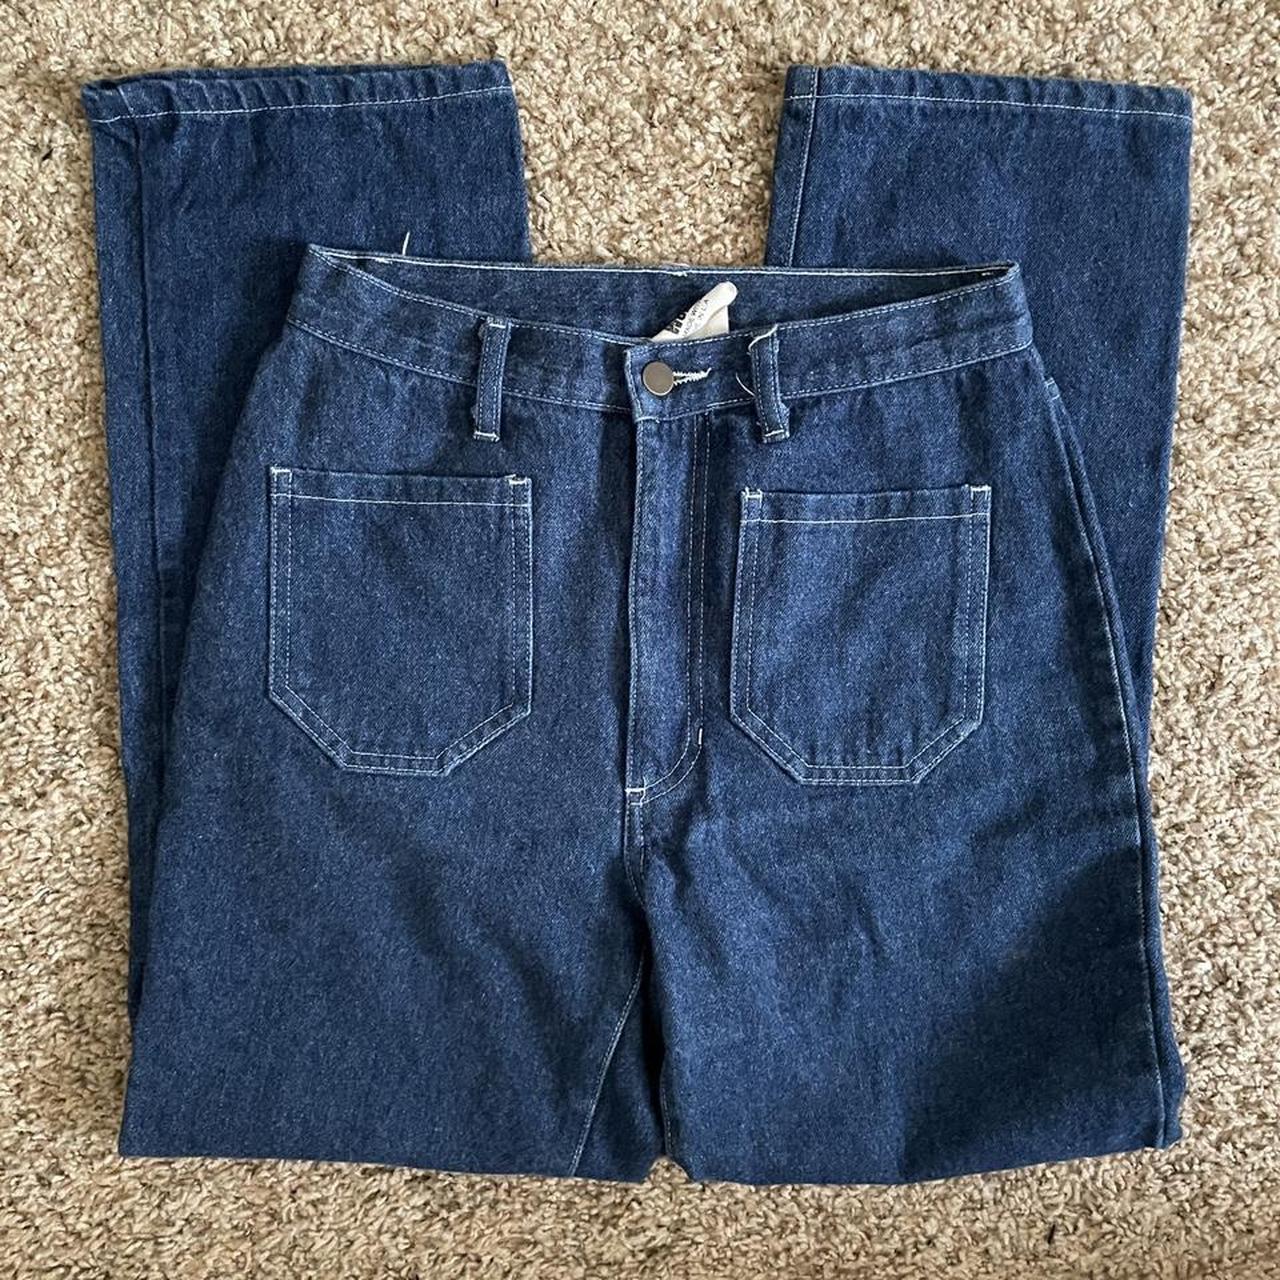 Product Image 1 - Lykke Wullf jeans, labeled size